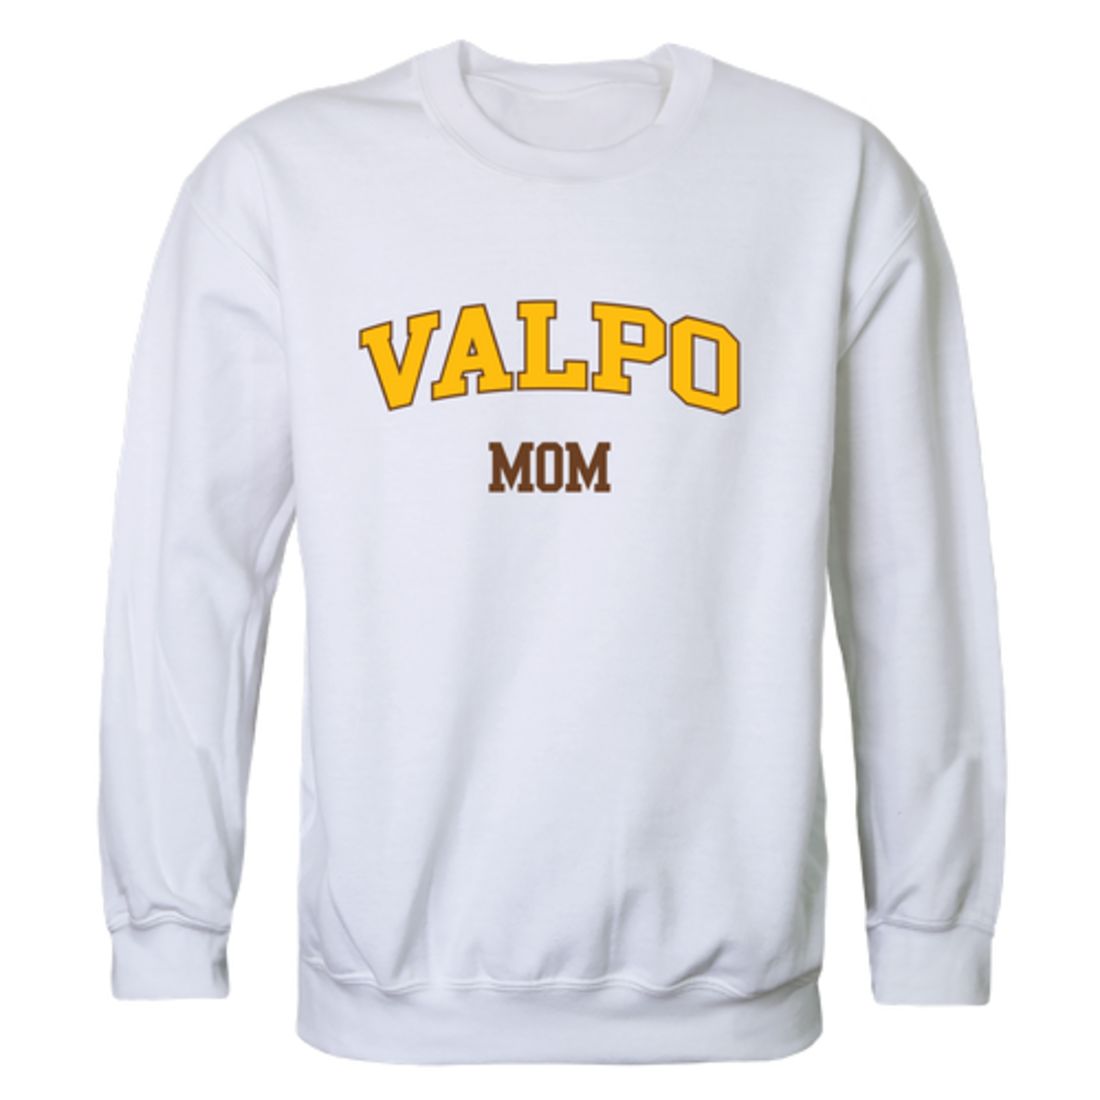 Valparaiso University Crusaders Mom Fleece Crewneck Pullover Sweatshirt Heather Charcoal Small-Campus-Wardrobe